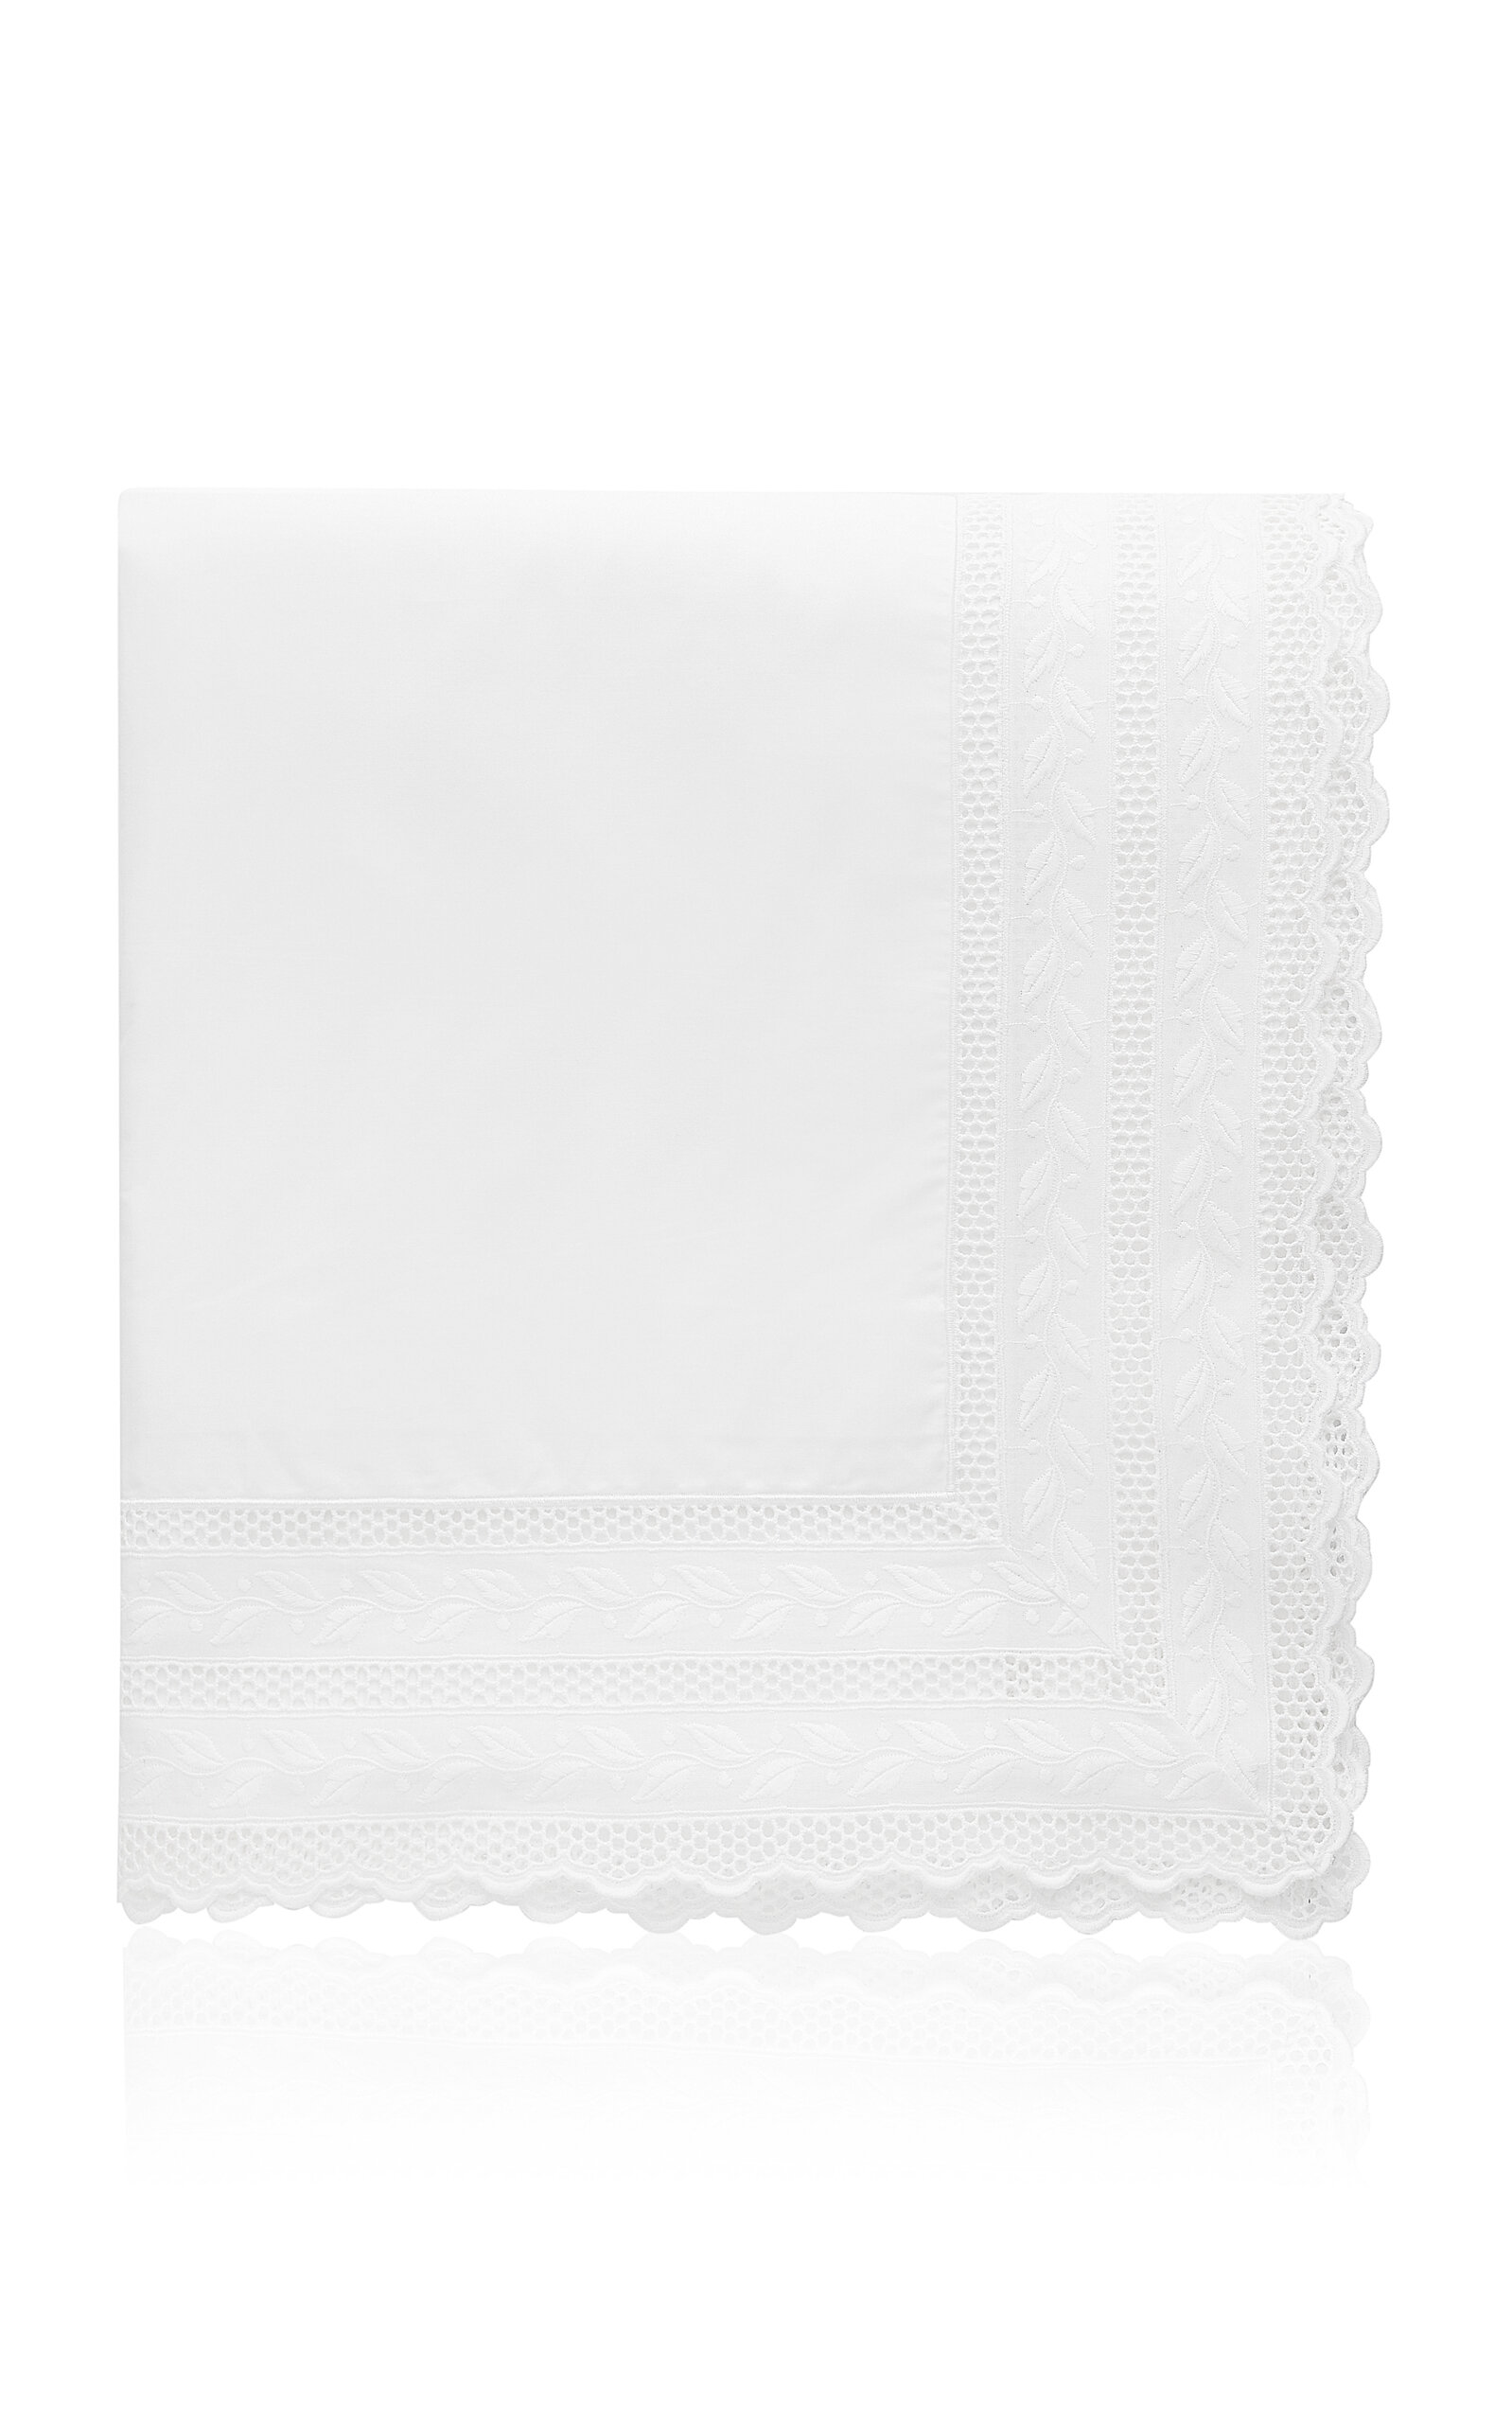 Los Encajeros Hojas Percale Percale Queen Duvet Cover In White